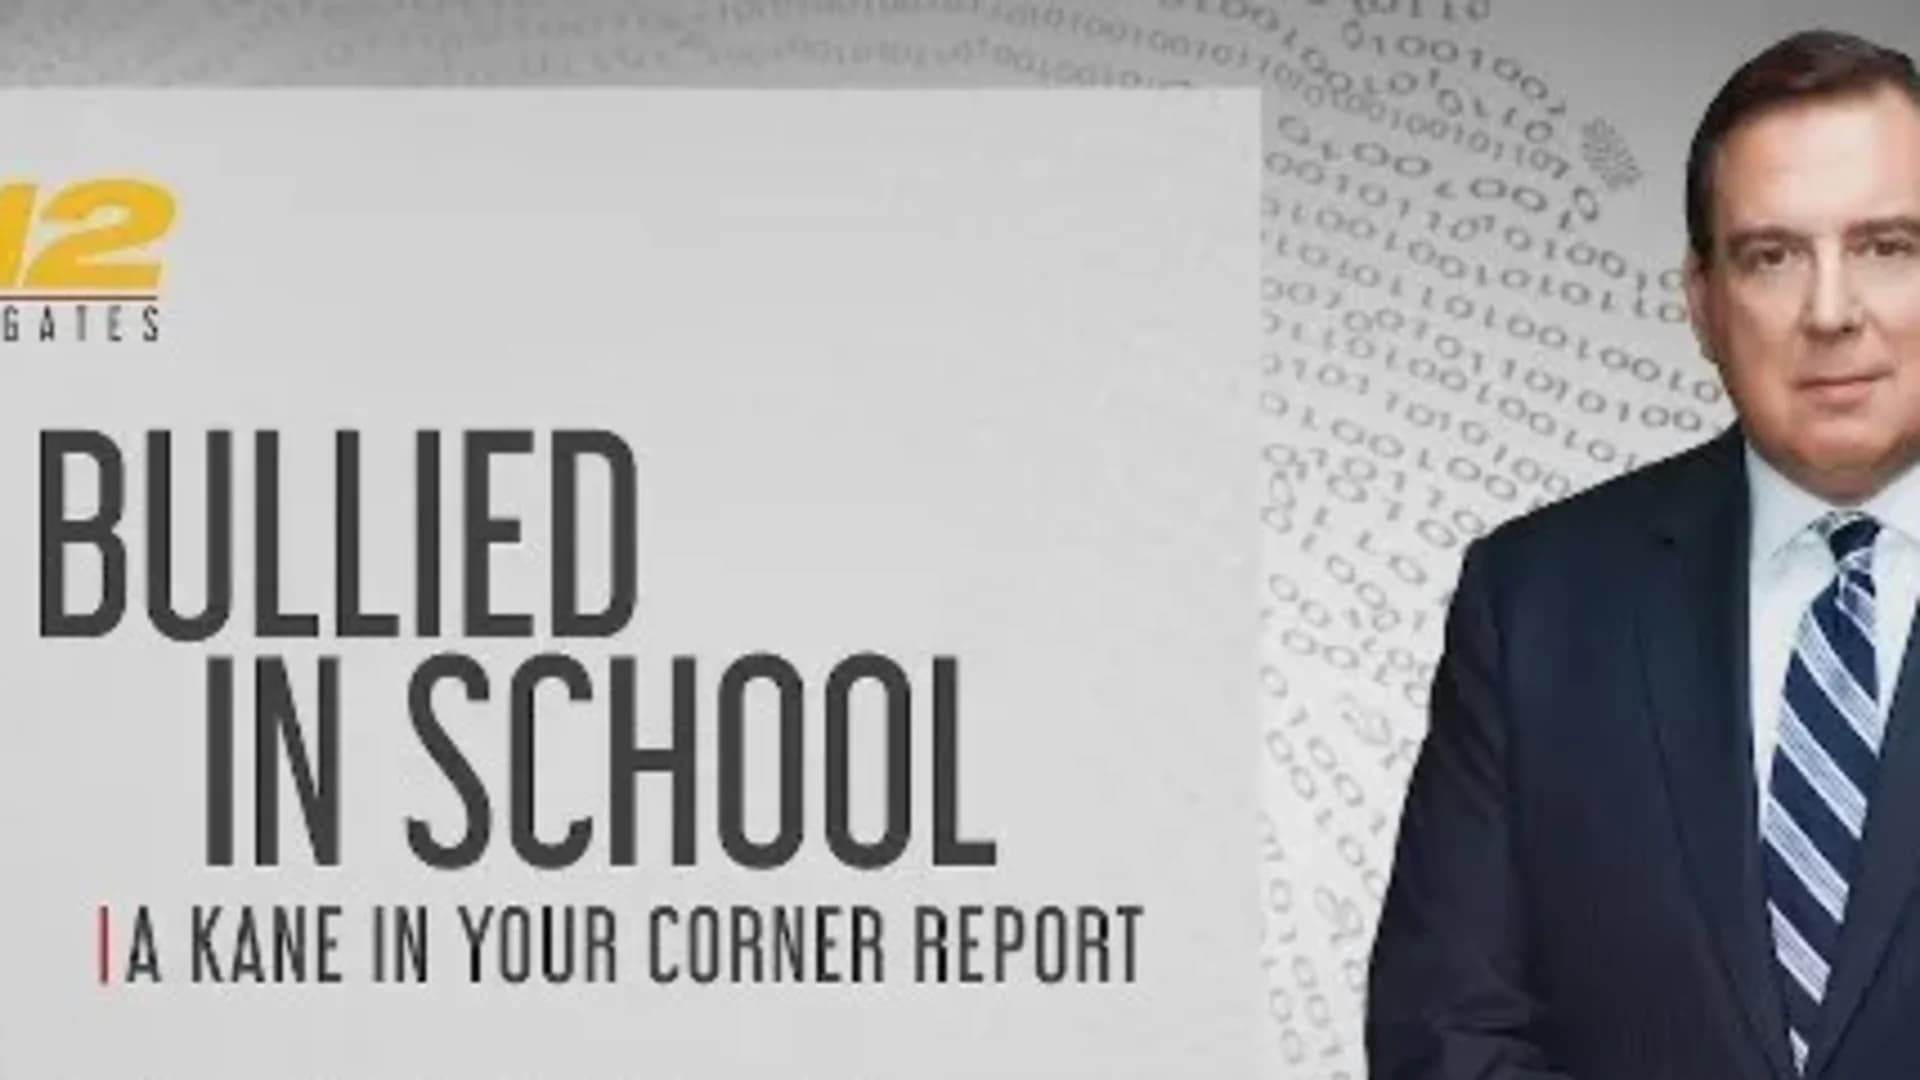 Kane In Your Corner podcast: Bullied in School - listen here